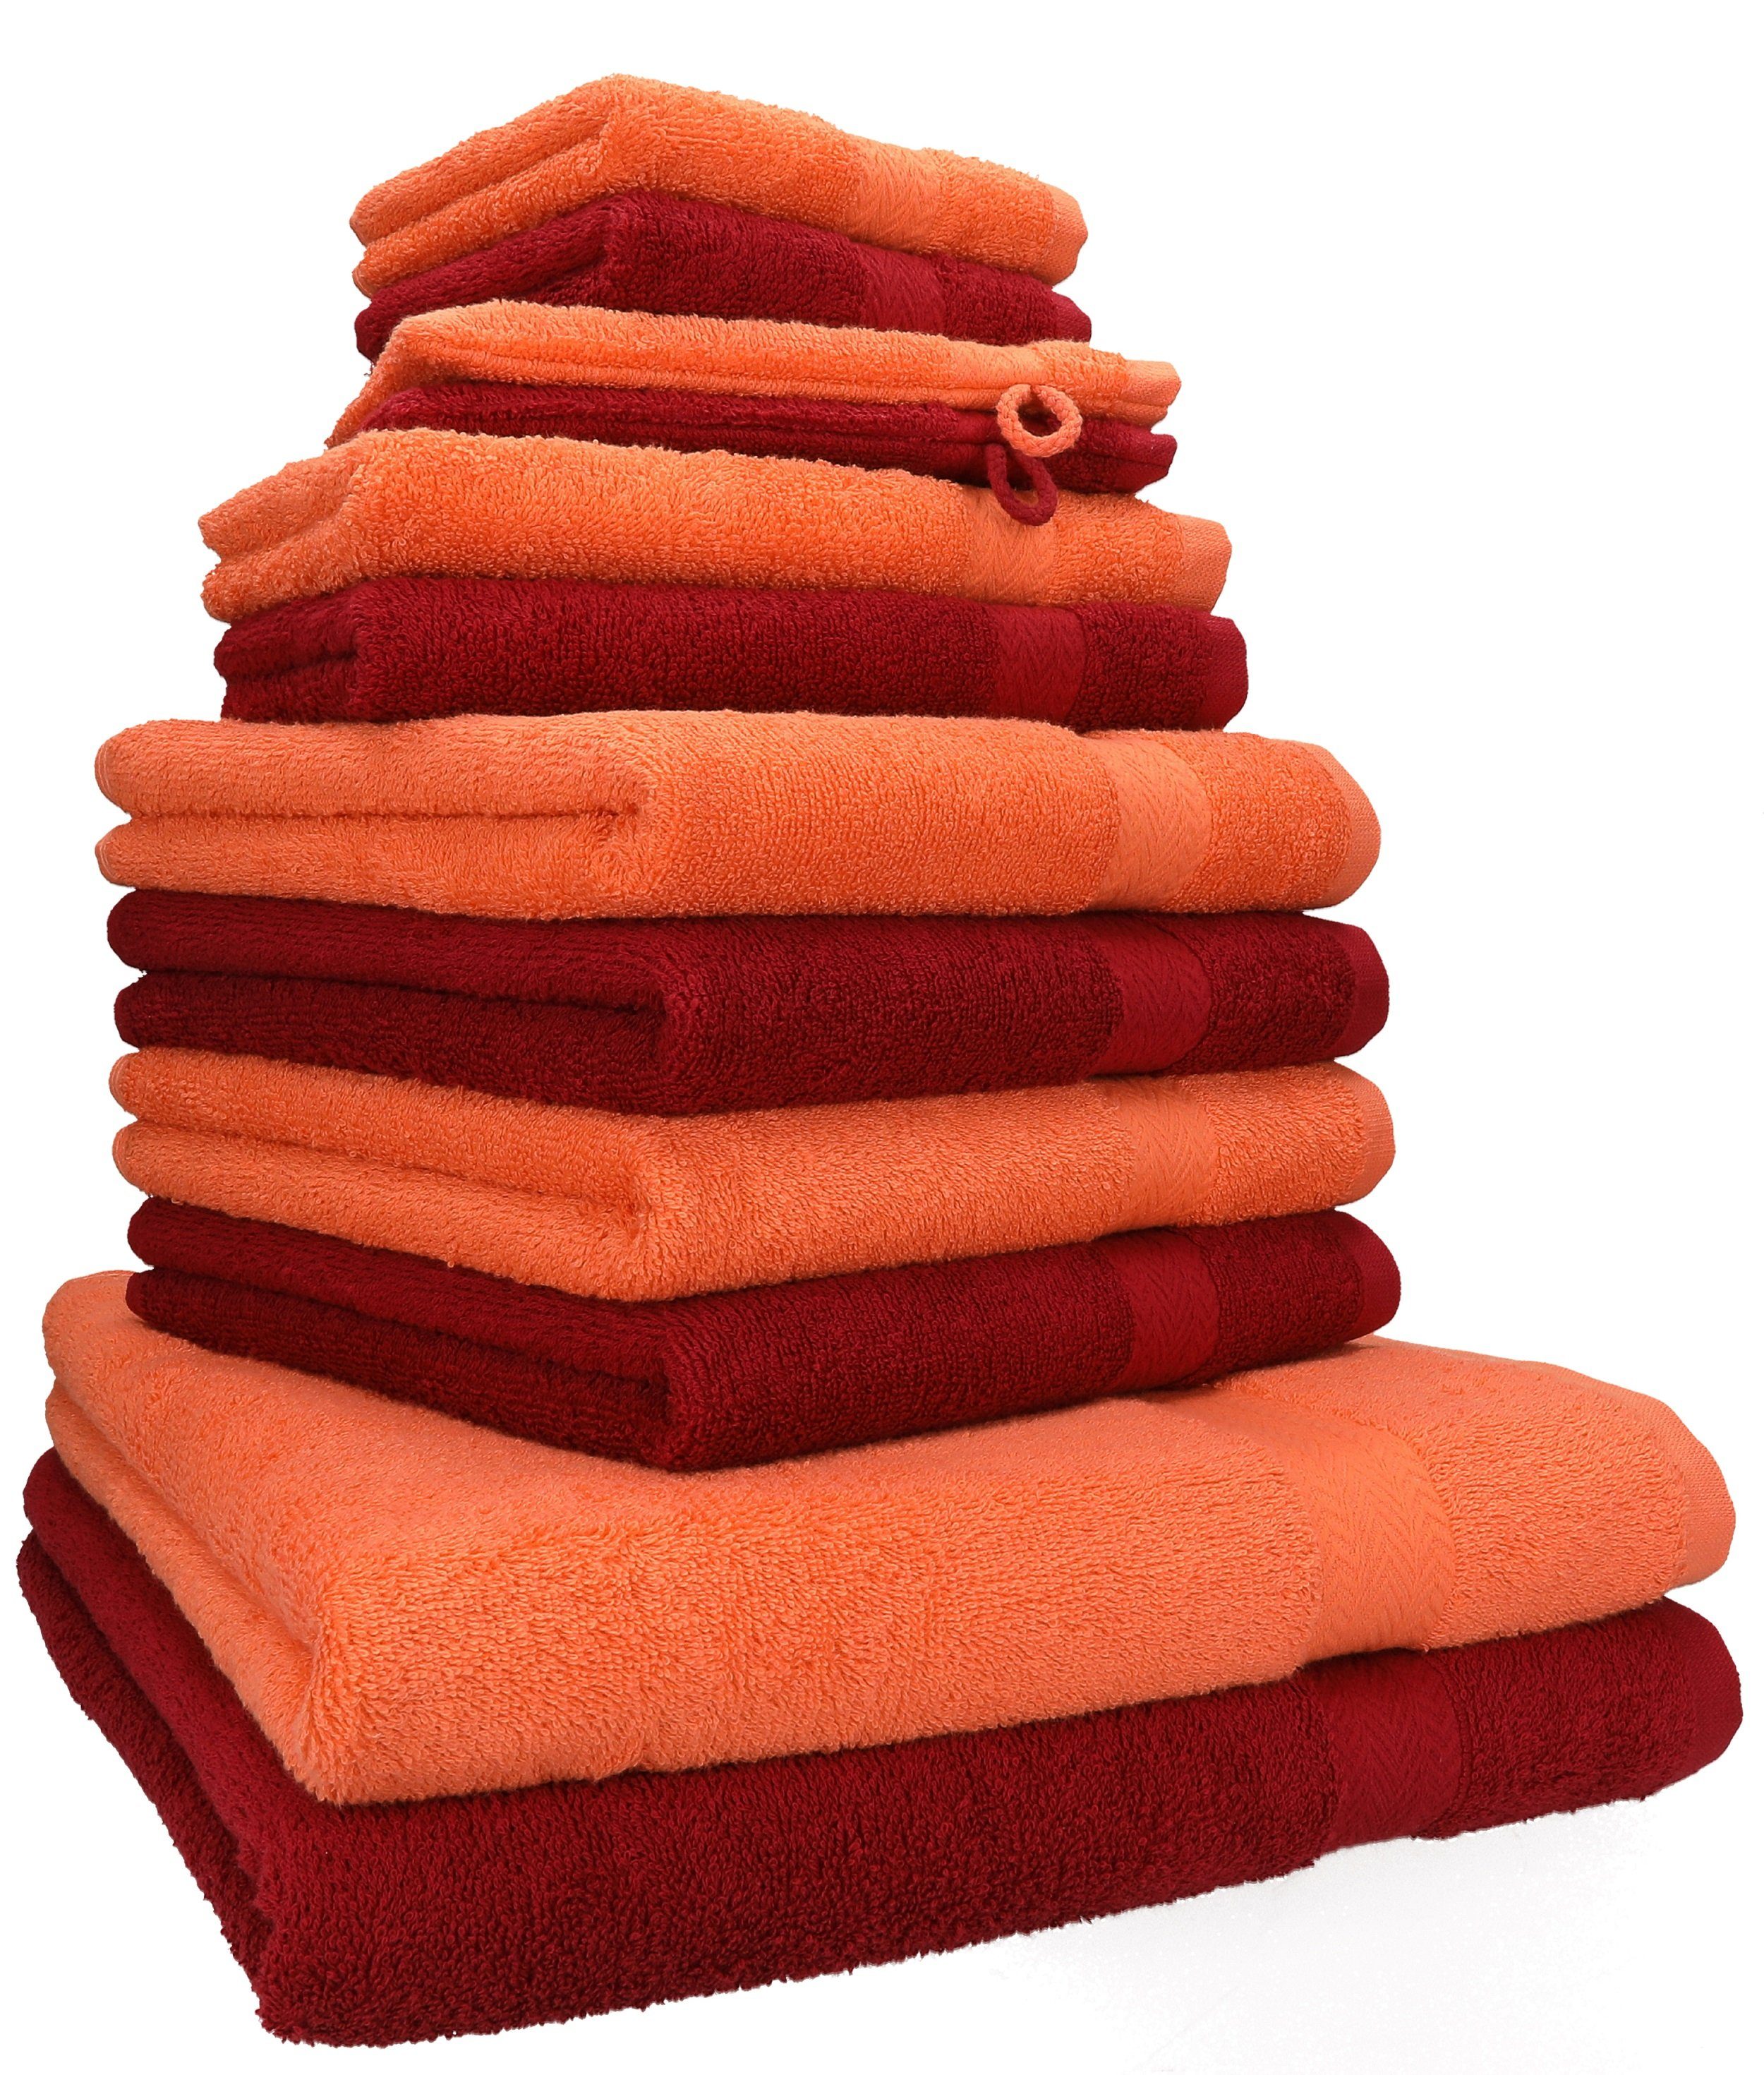 Betz Handtuch Set 12-TLG. Handtuch Set Premium 100% Baumwolle 2 Duschtücher 4 Handtücher 2 Gästetücher 2 Seiftücher 2 Waschhandschuhe Farbe blutorange/rubinrot, 100% Baumwolle, (12-tlg)